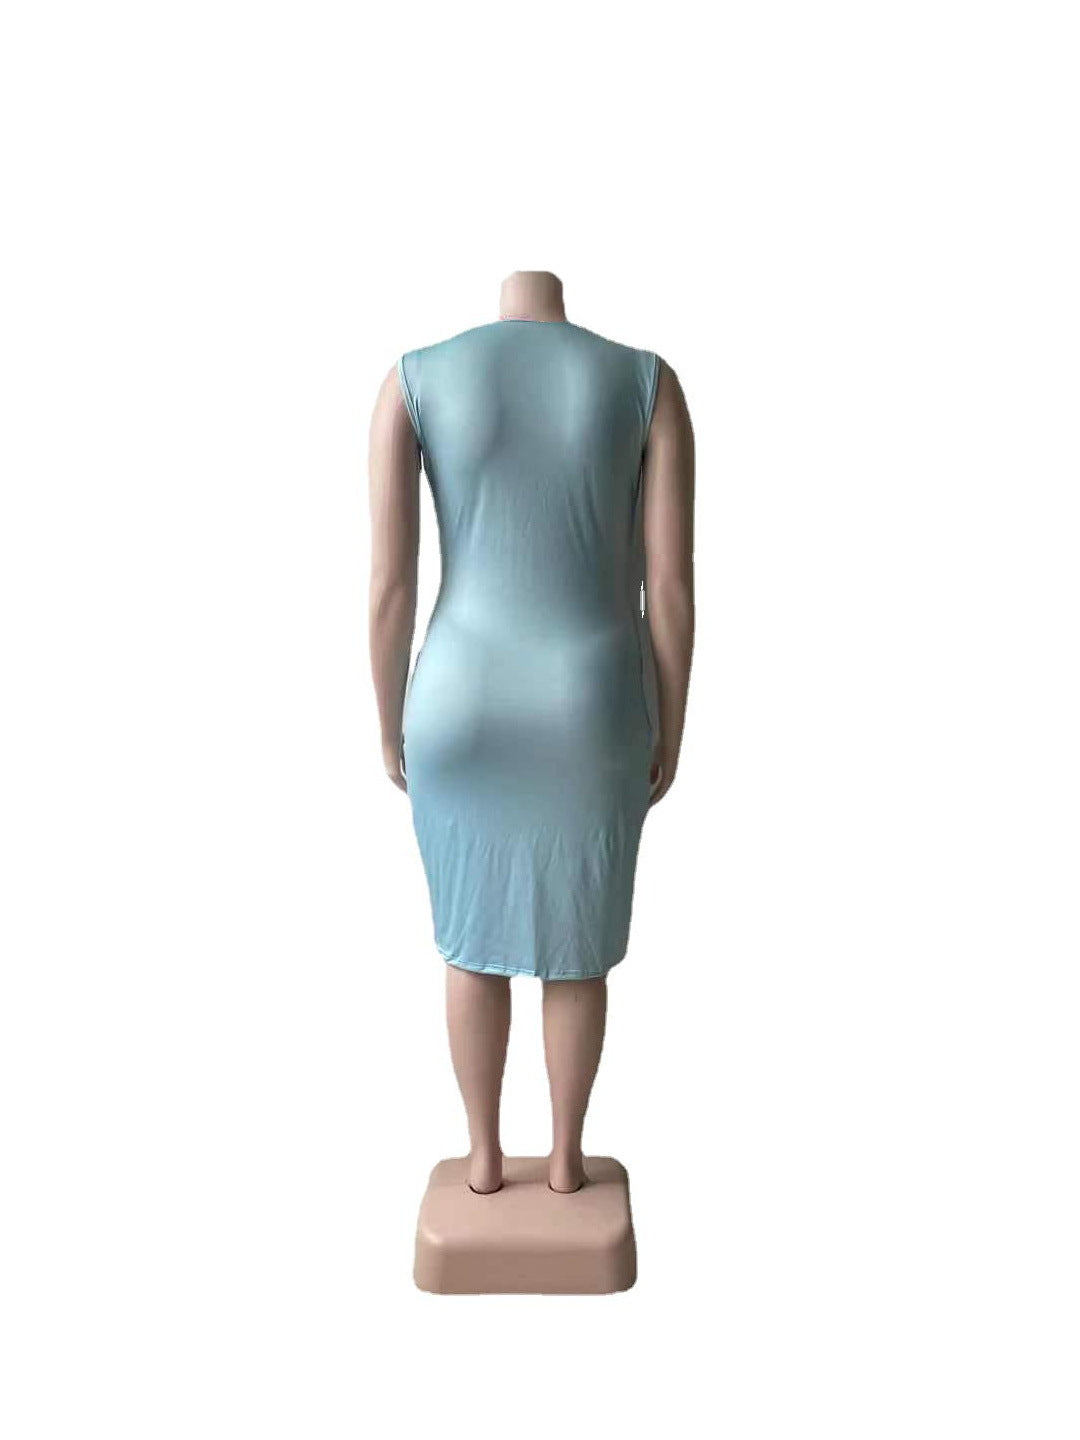 Plus Size Women's V-neck Slit Solid Color Dress  dresses Thecurvestory